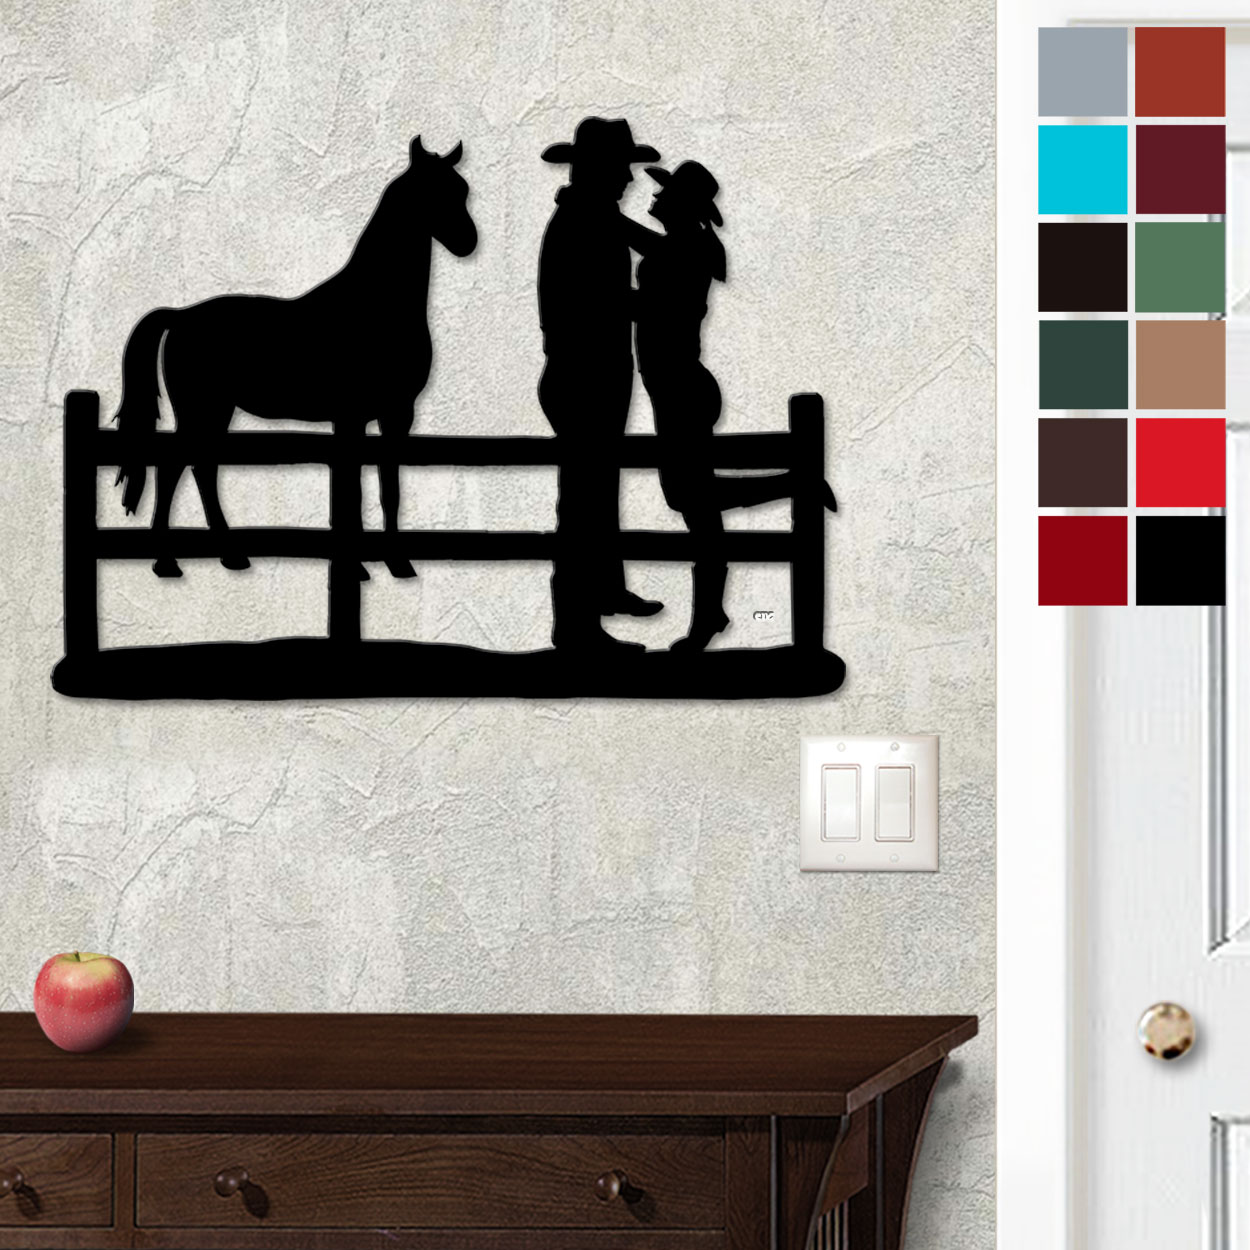 625010 - 18in or 24in Floating Metal Wall Art - Cowboy Corral - Choose Color